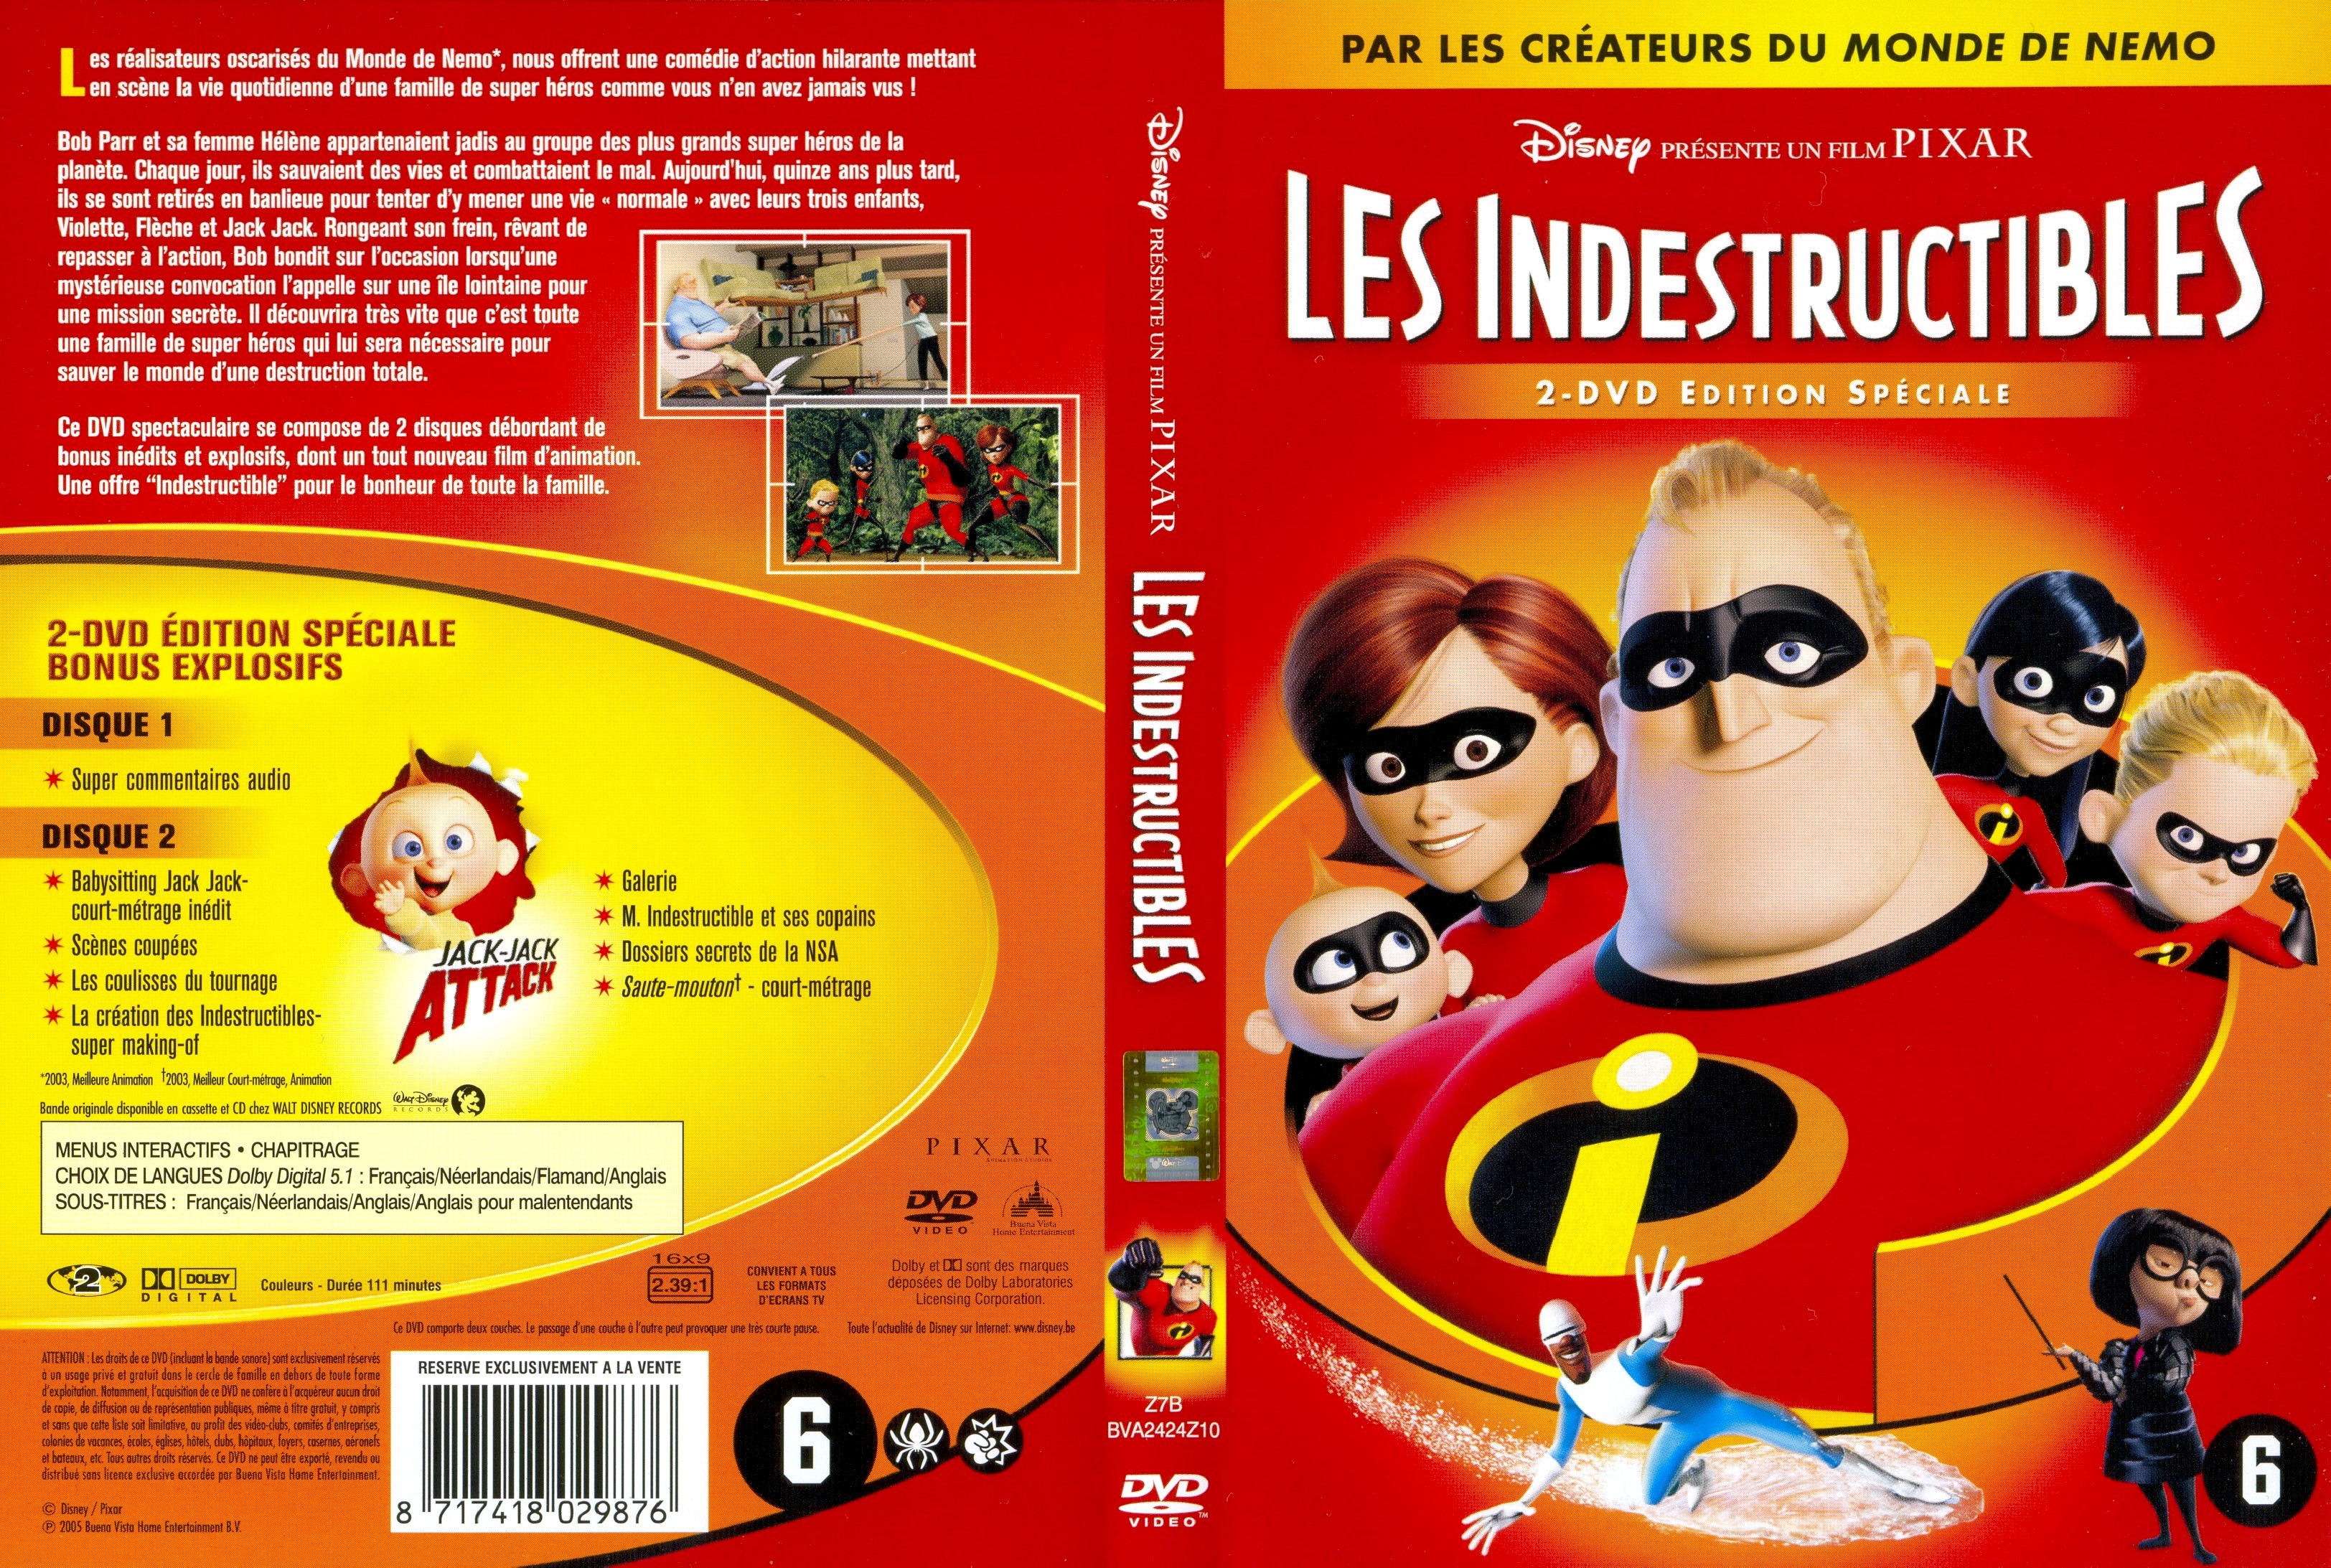 Jaquette DVD Les indestructibles v3